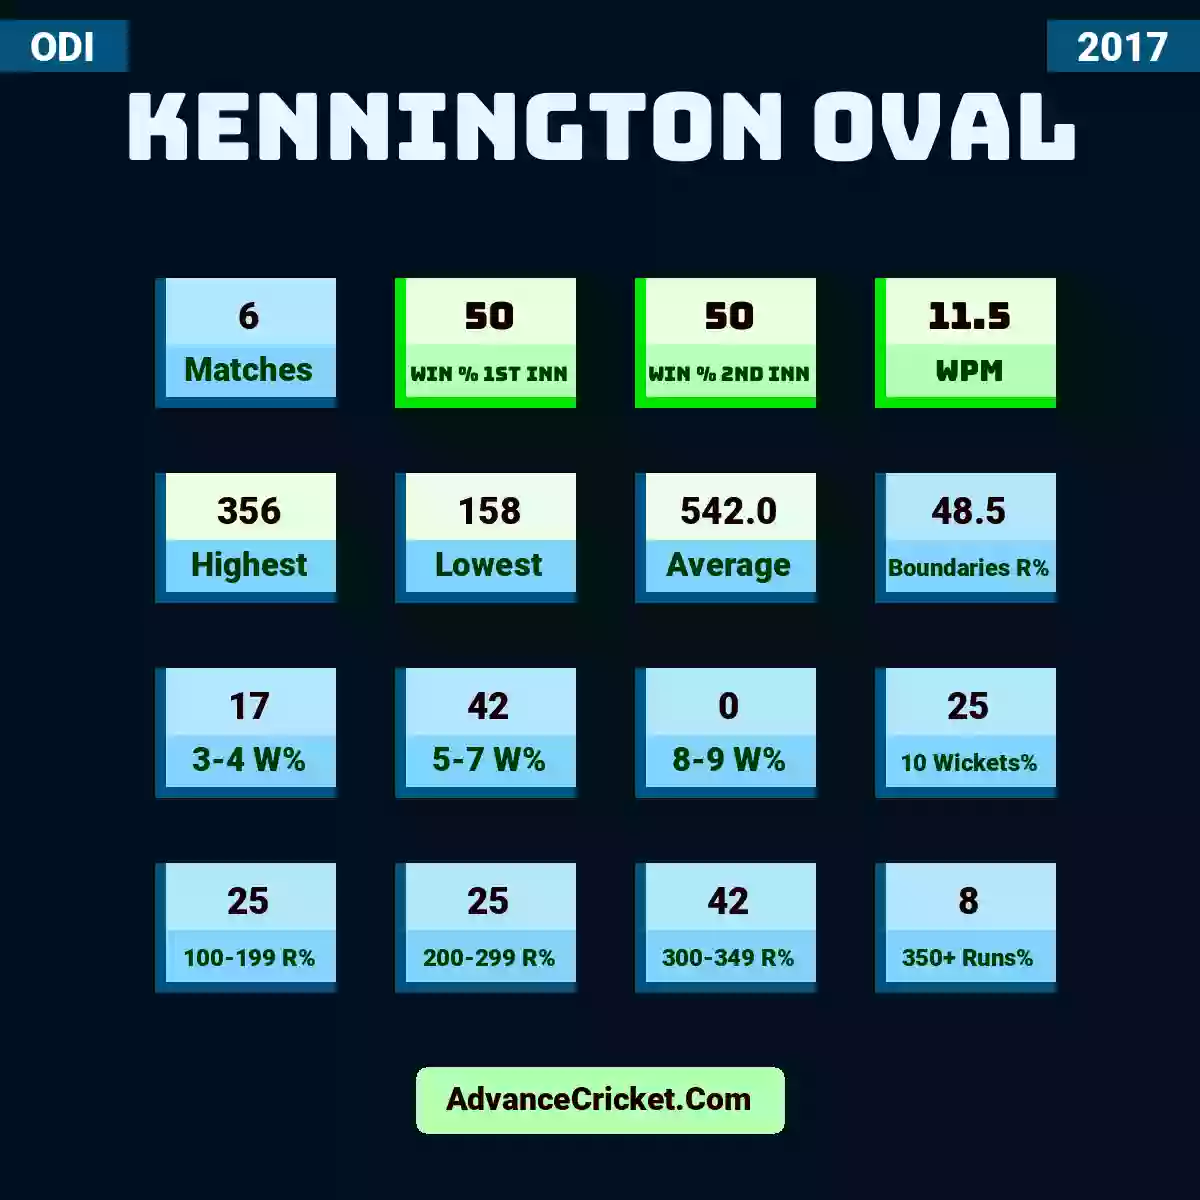 Image showing Kennington Oval with Matches: 6, Win % 1st Inn: 50, Win % 2nd Inn: 50, WPM: 11.5, Highest: 356, Lowest: 158, Average: 542.0, Boundaries R%: 48.5, 3-4 W%: 17, 5-7 W%: 42, 8-9 W%: 0, 10 Wickets%: 25, 100-199 R%: 25, 200-299 R%: 25, 300-349 R%: 42, 350+ Runs%: 8.